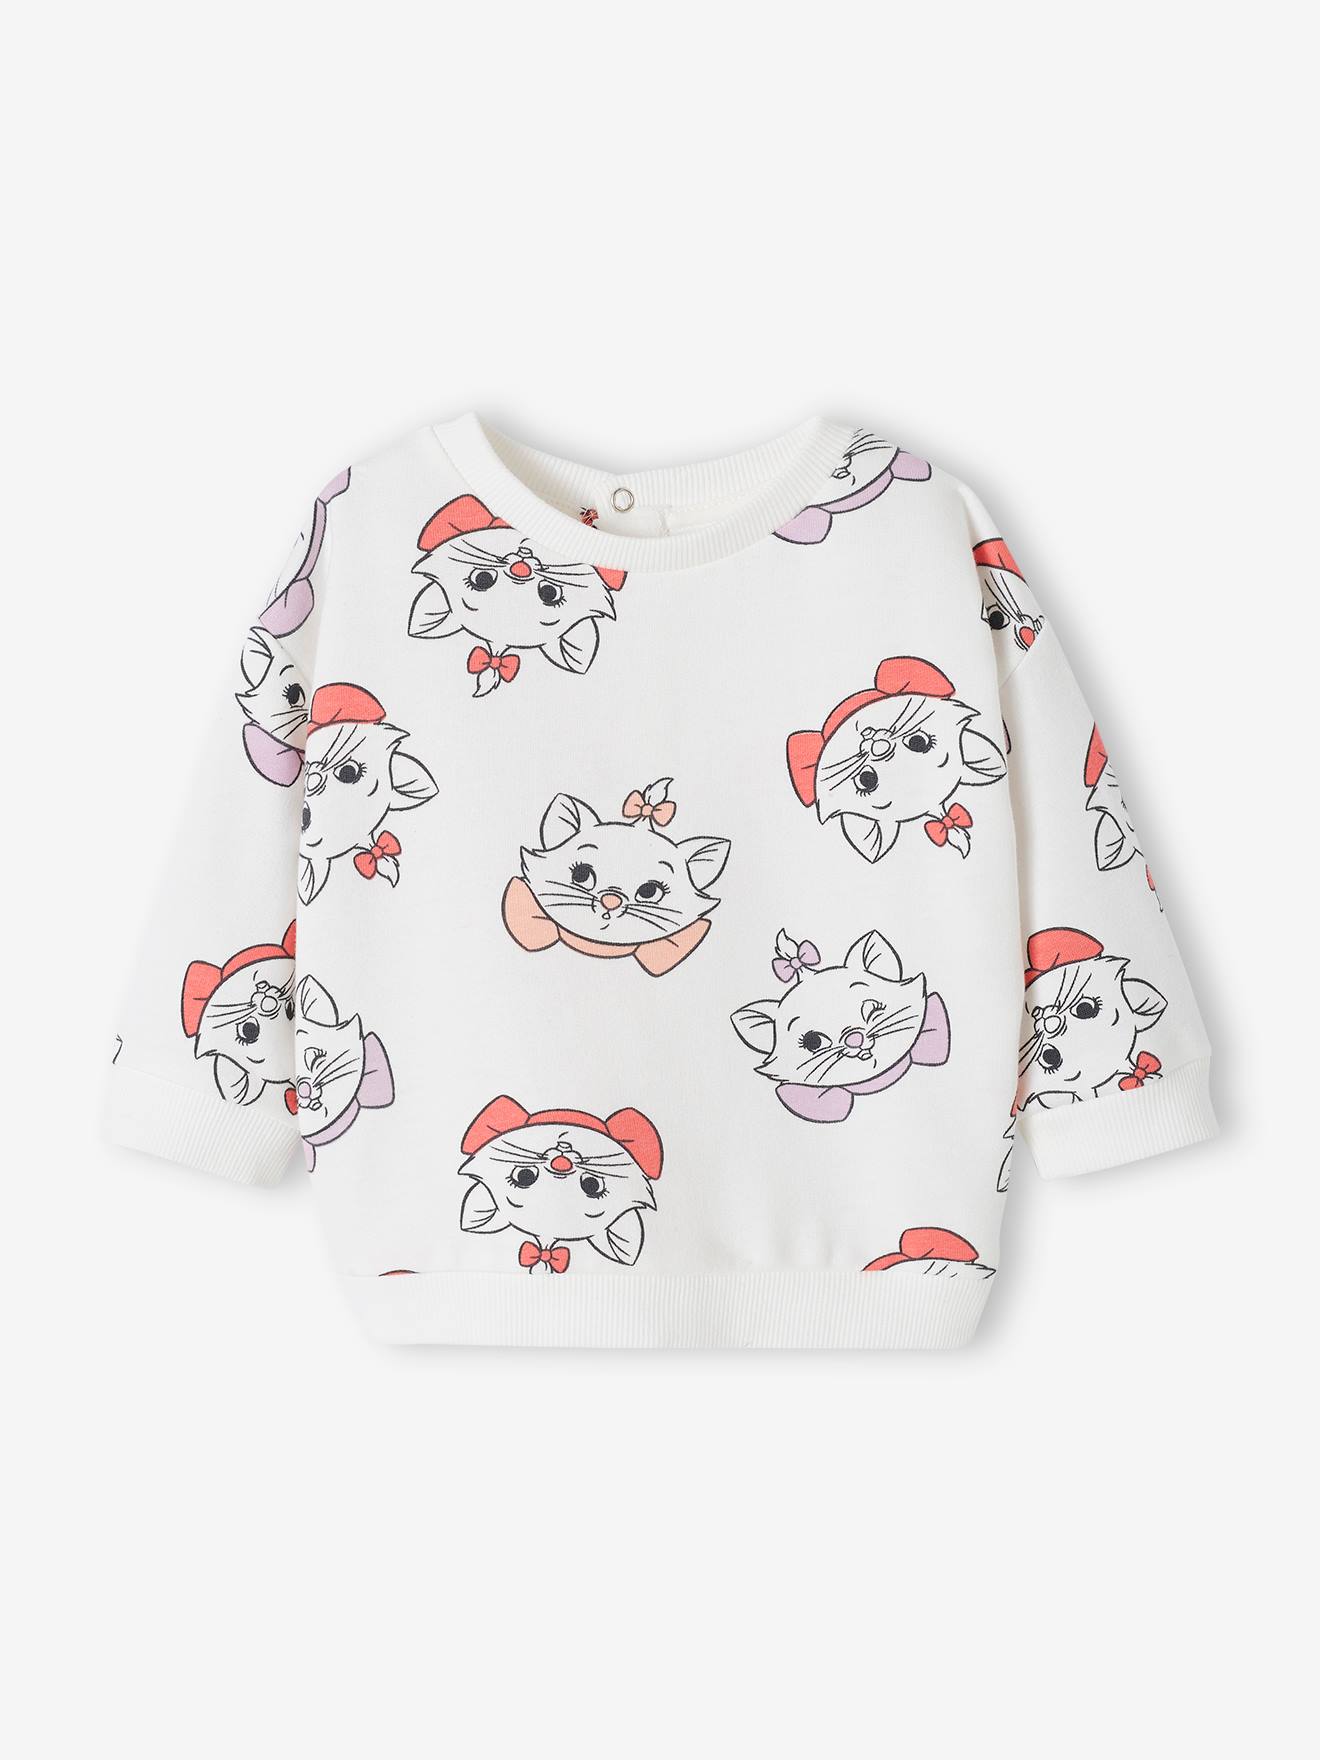 Marie Sweatshirt for Babies, Disney(r) The Aristocats ecru